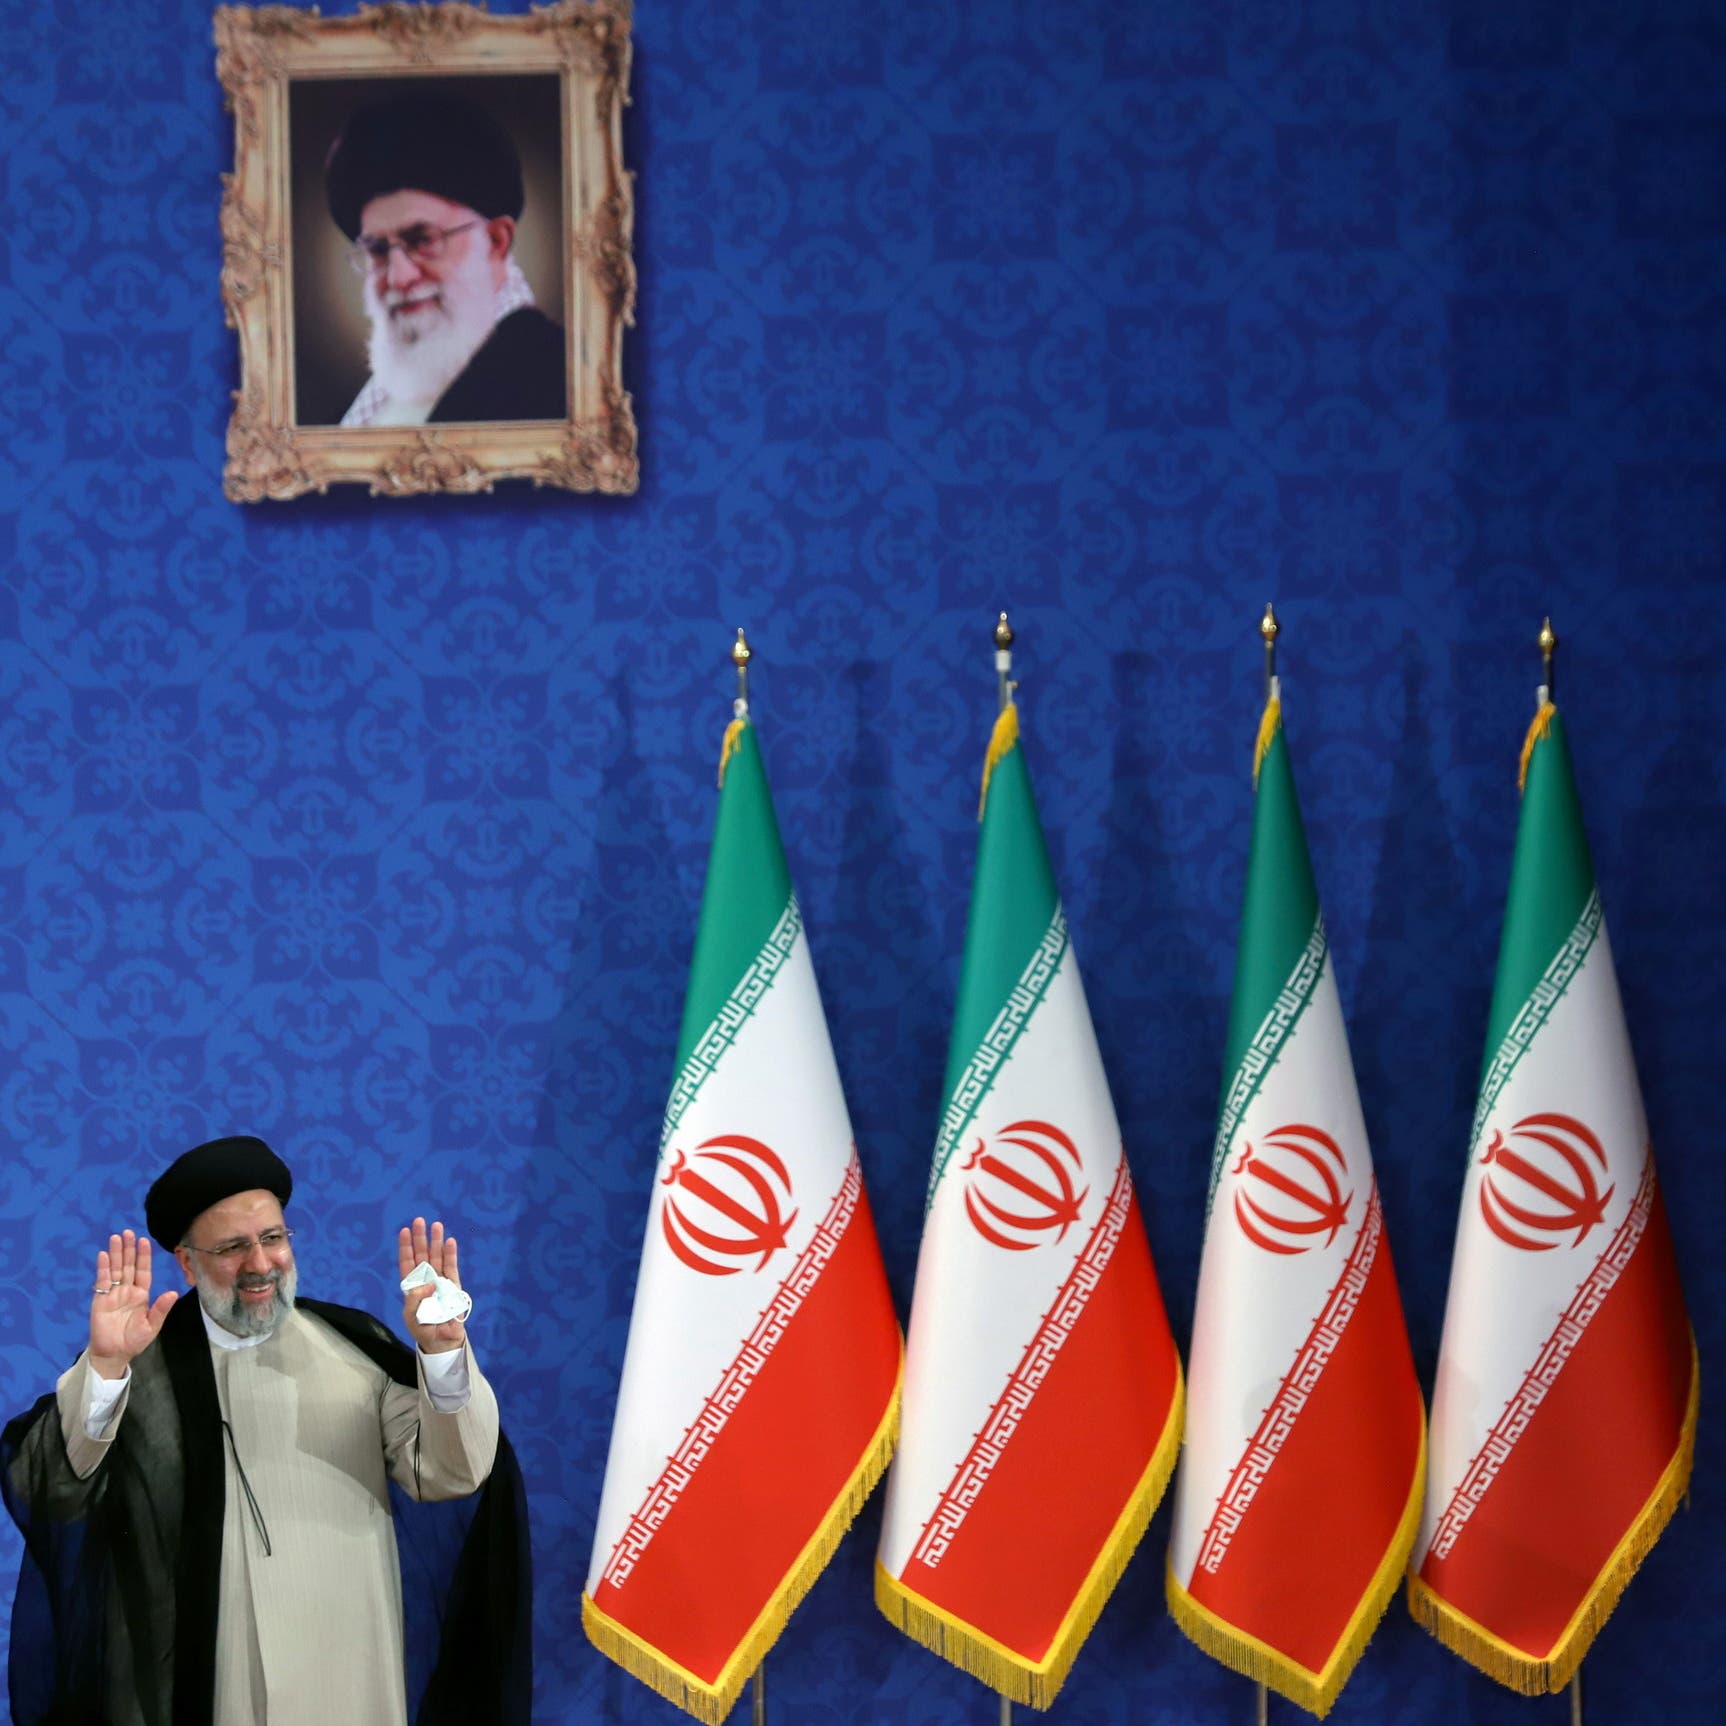 Iran’s Raisi inaugurated as president: State TV